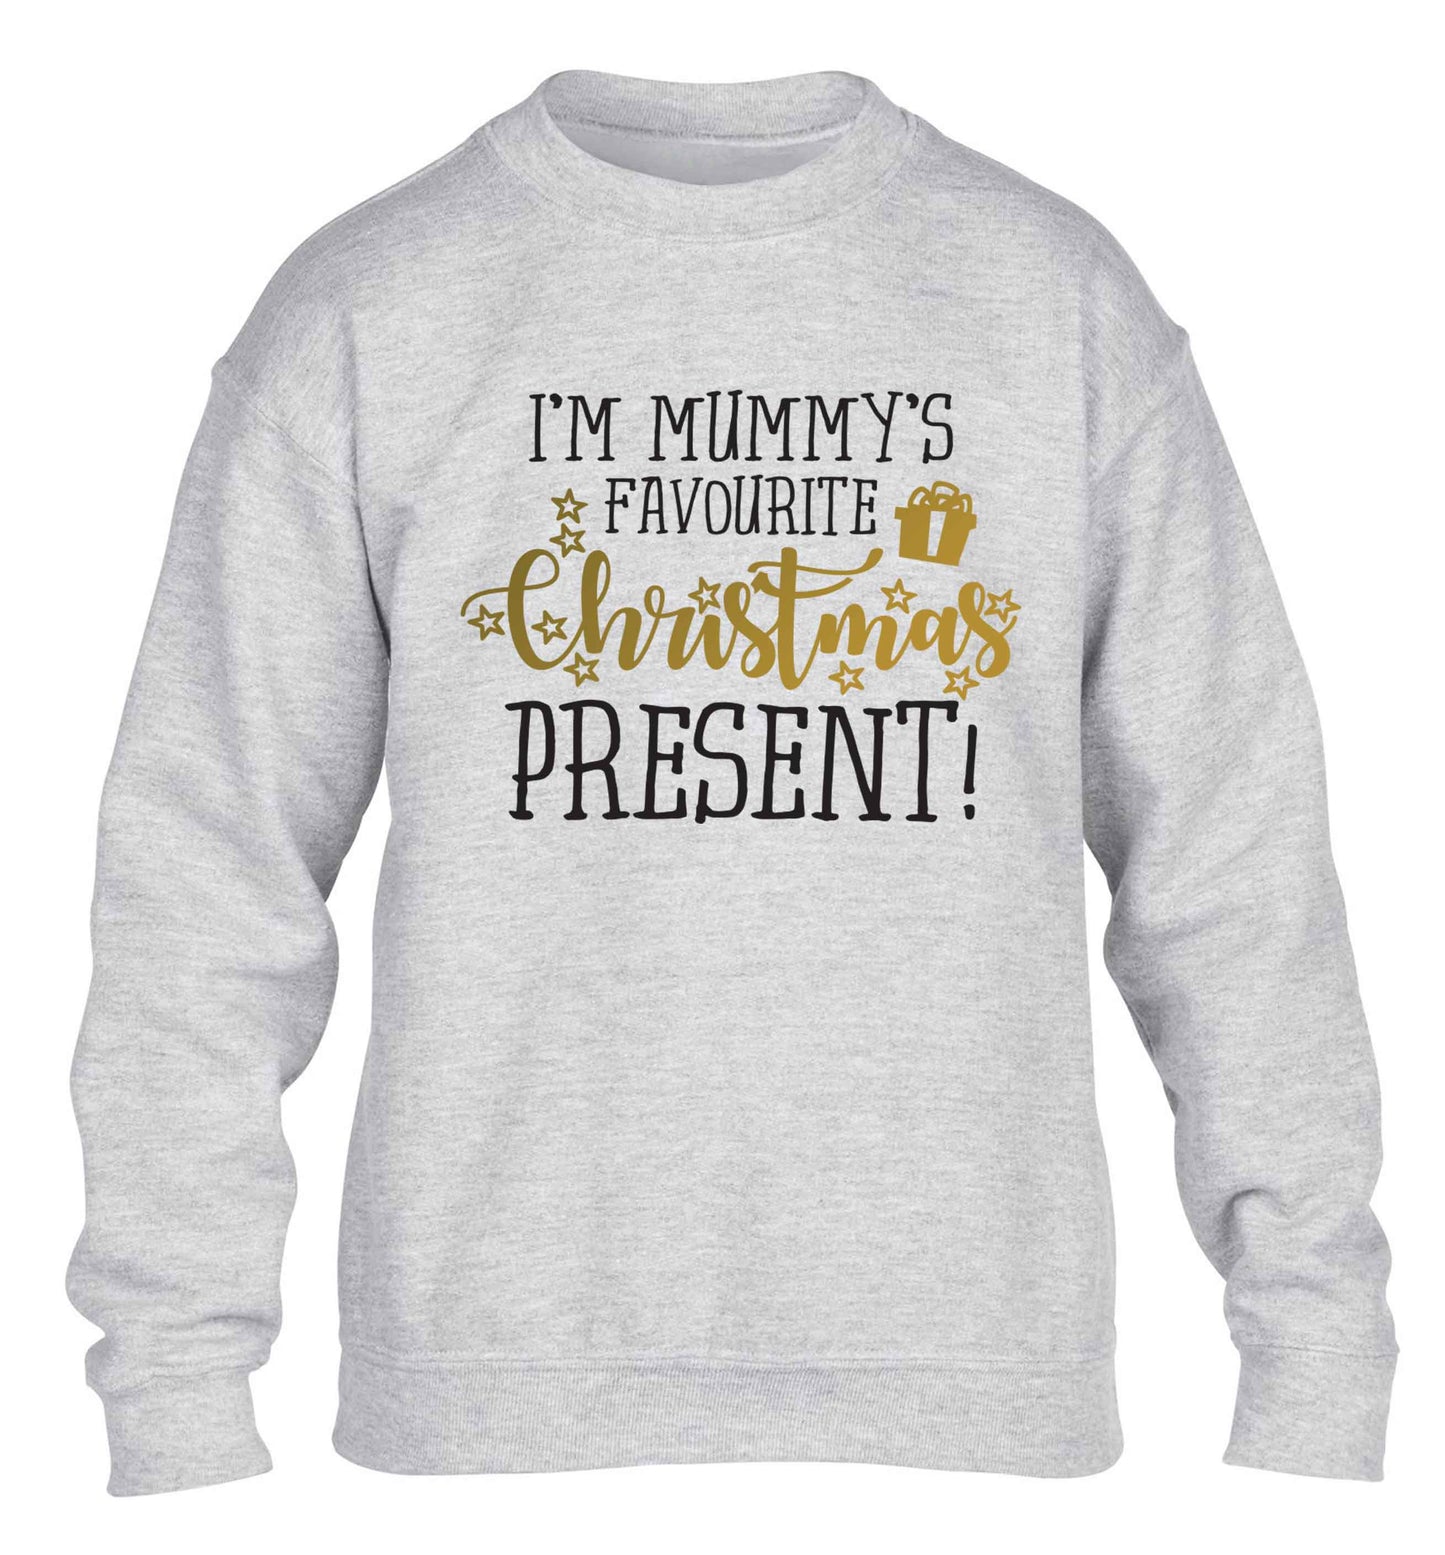 I'm Mummy's favourite Christmas present children's grey sweater 12-13 Years